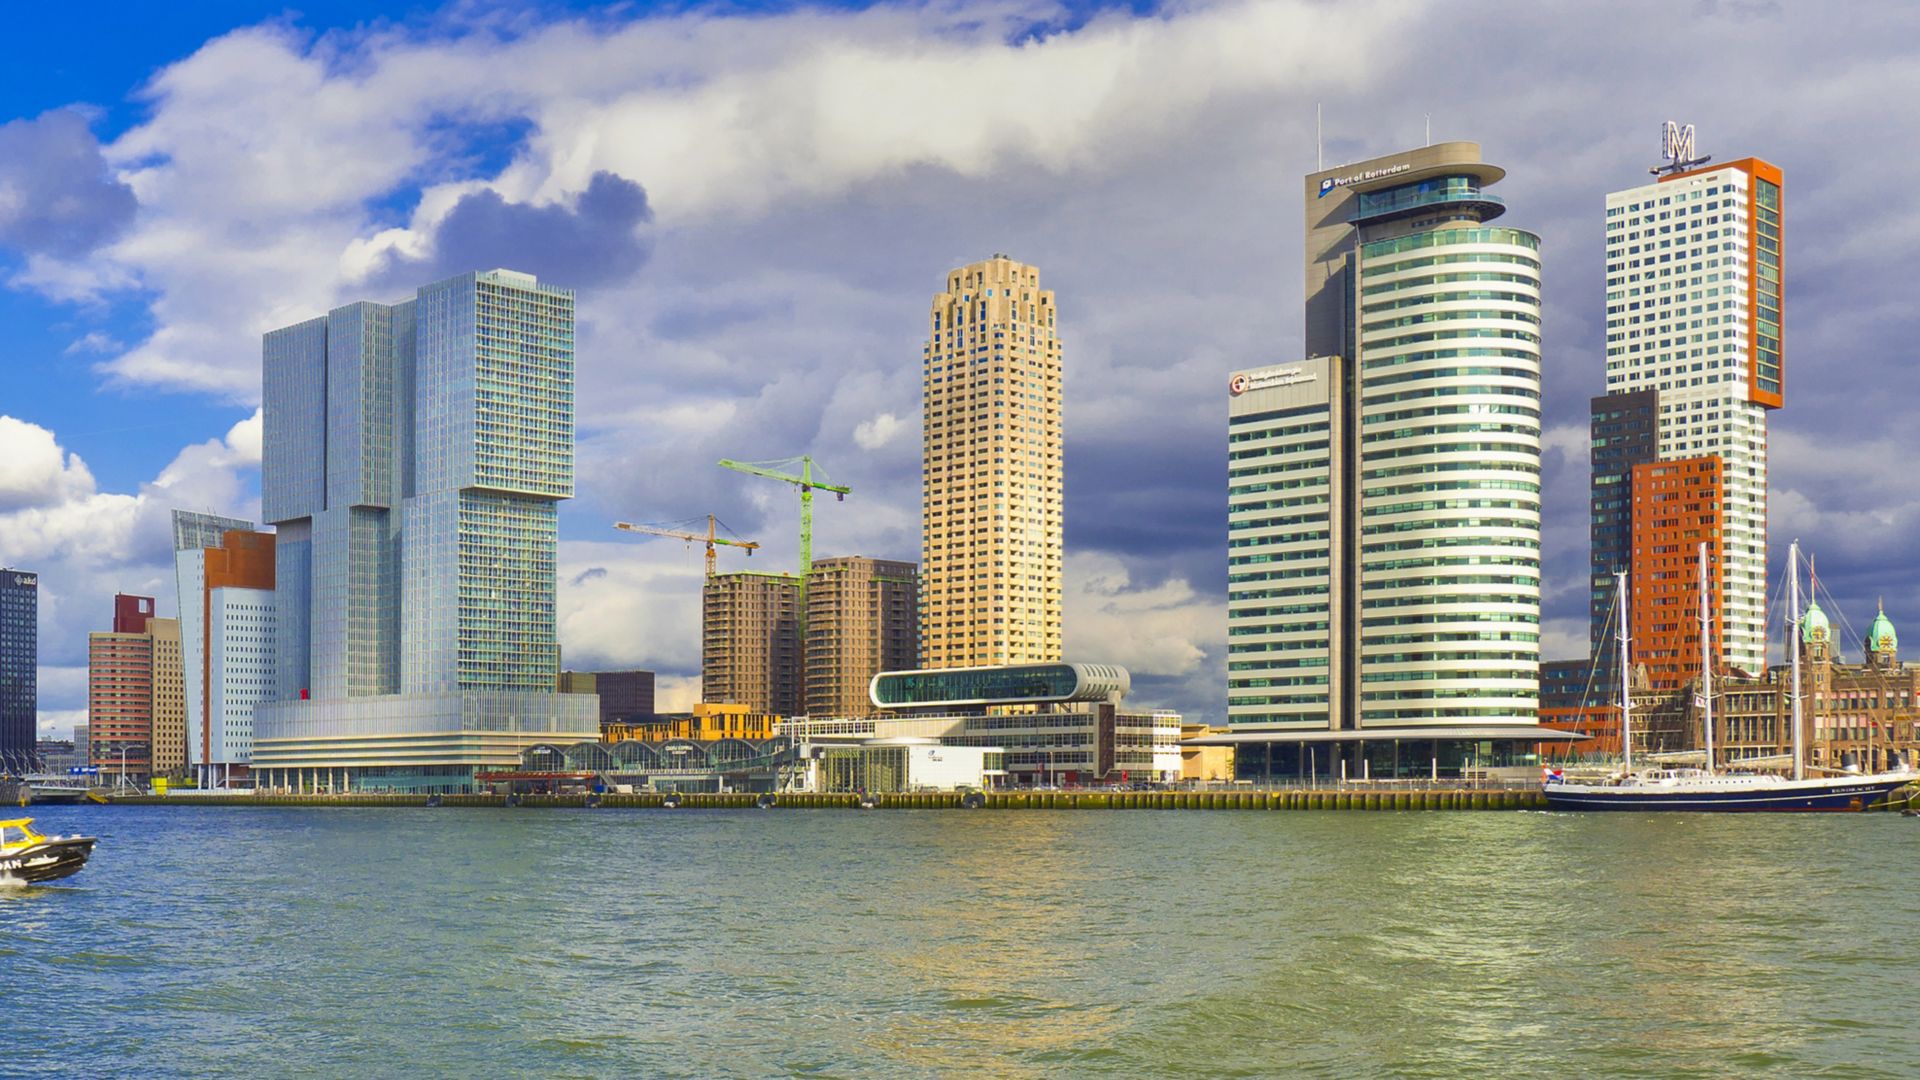 Nieuwe Maas River, Modern Architecture, Rotterdam, Holland, Netherlands, Europe